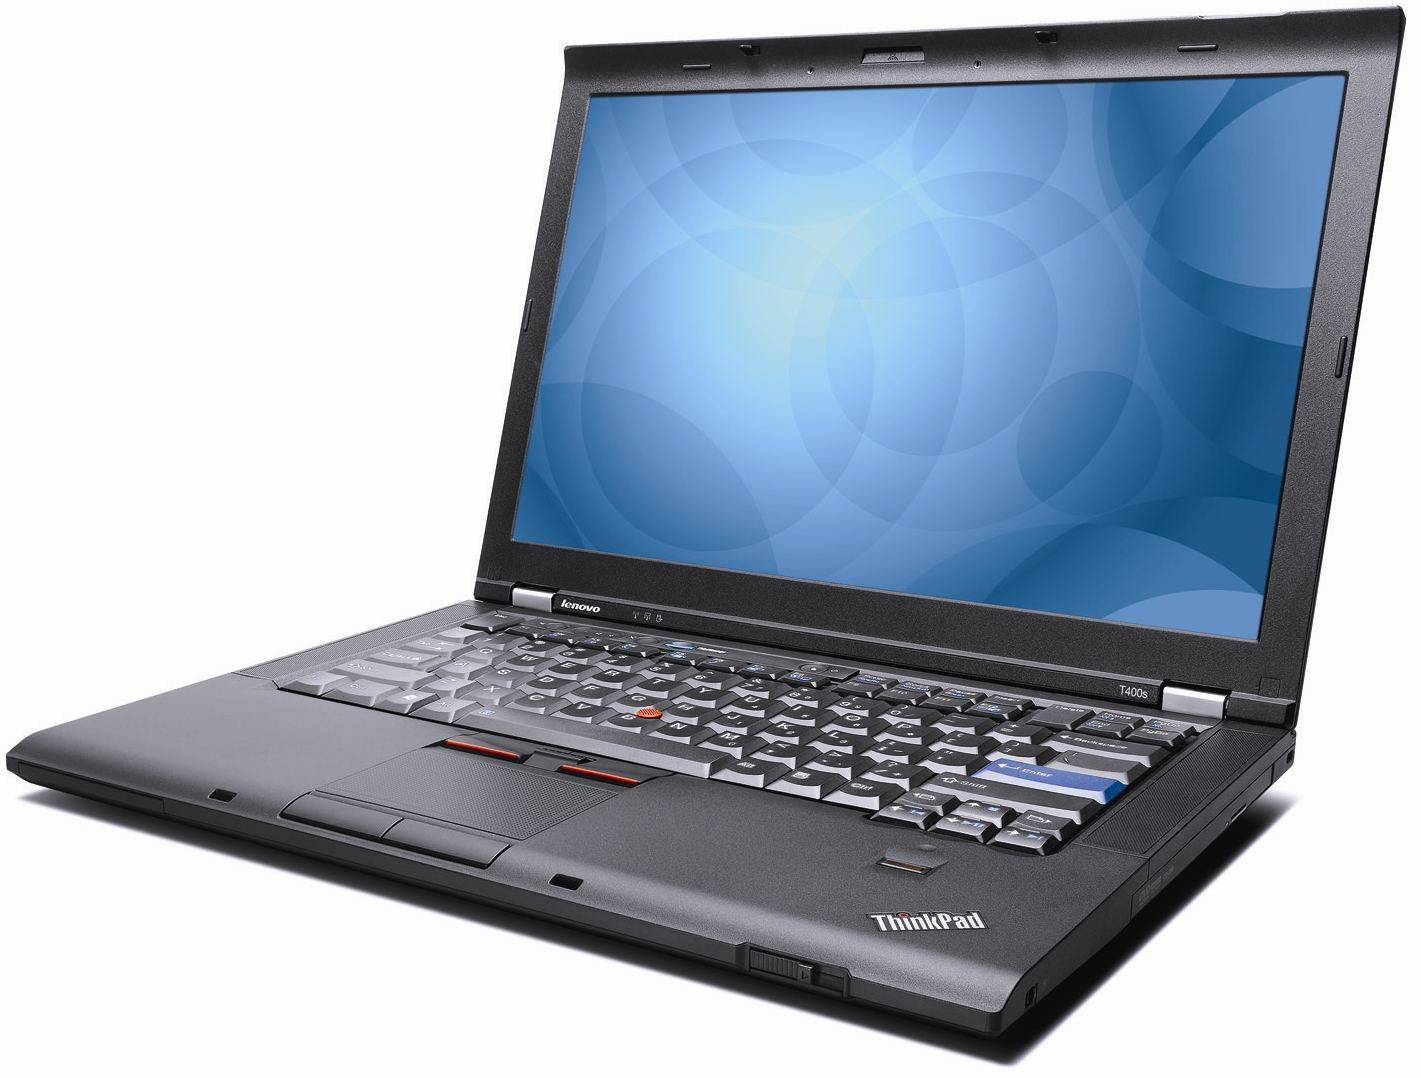 Lenovo ThinkPad T400  Drivers Download